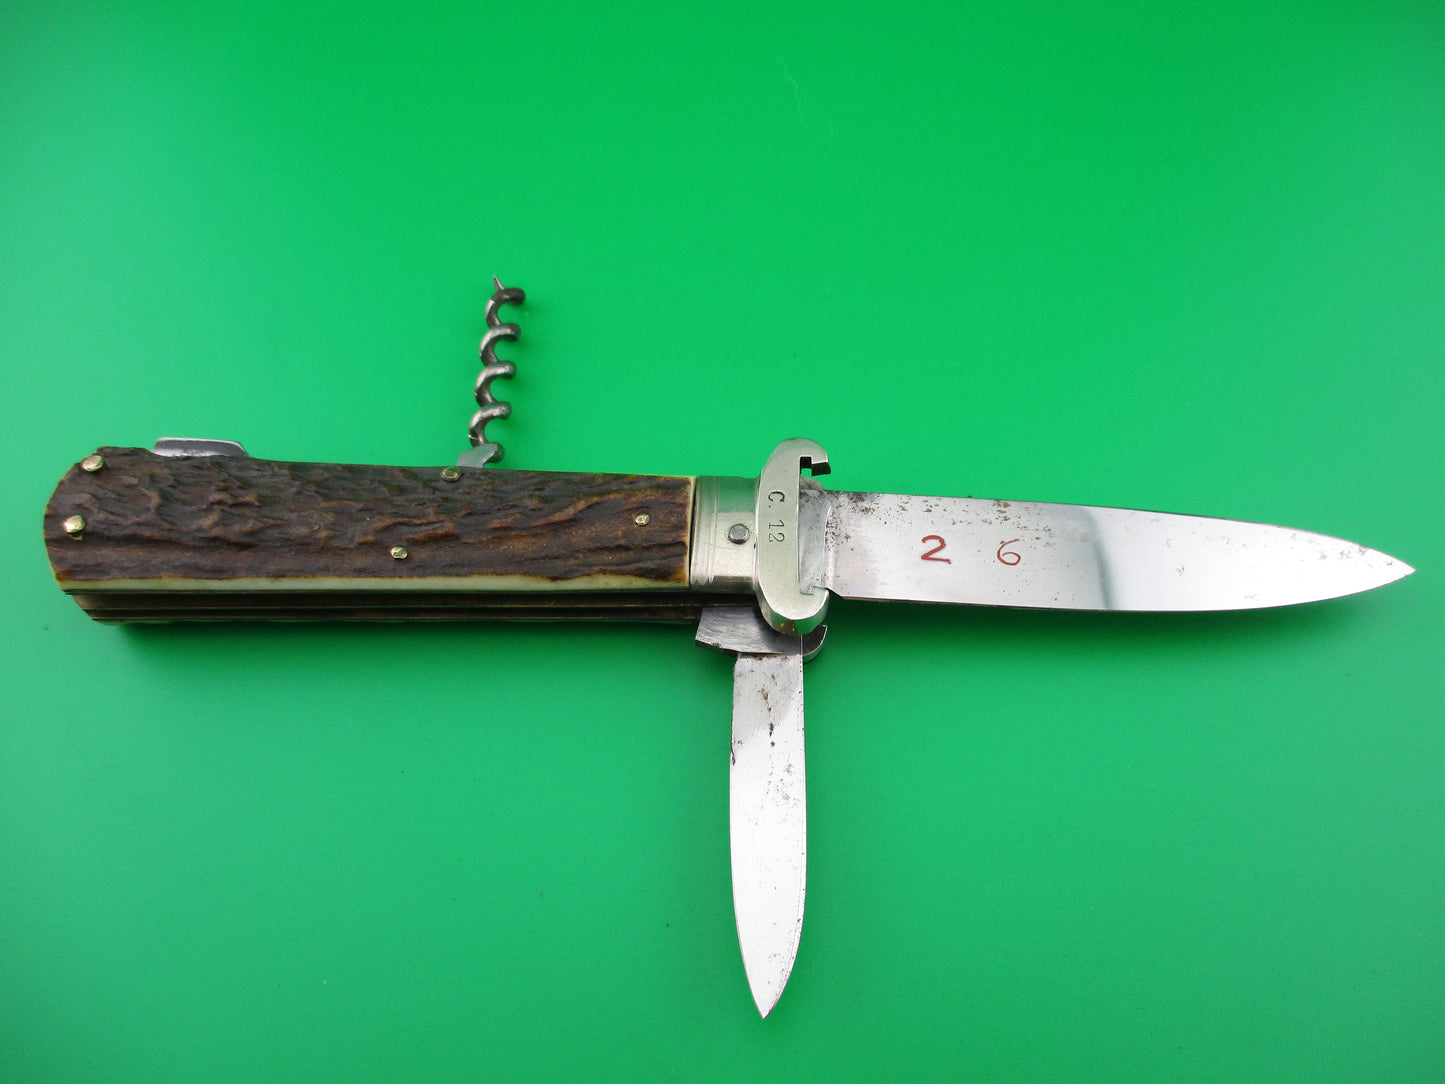 Weltersbach SOLINGEN Germany NOS Stag Shell Puller Corkscrew multi blade Manual knife